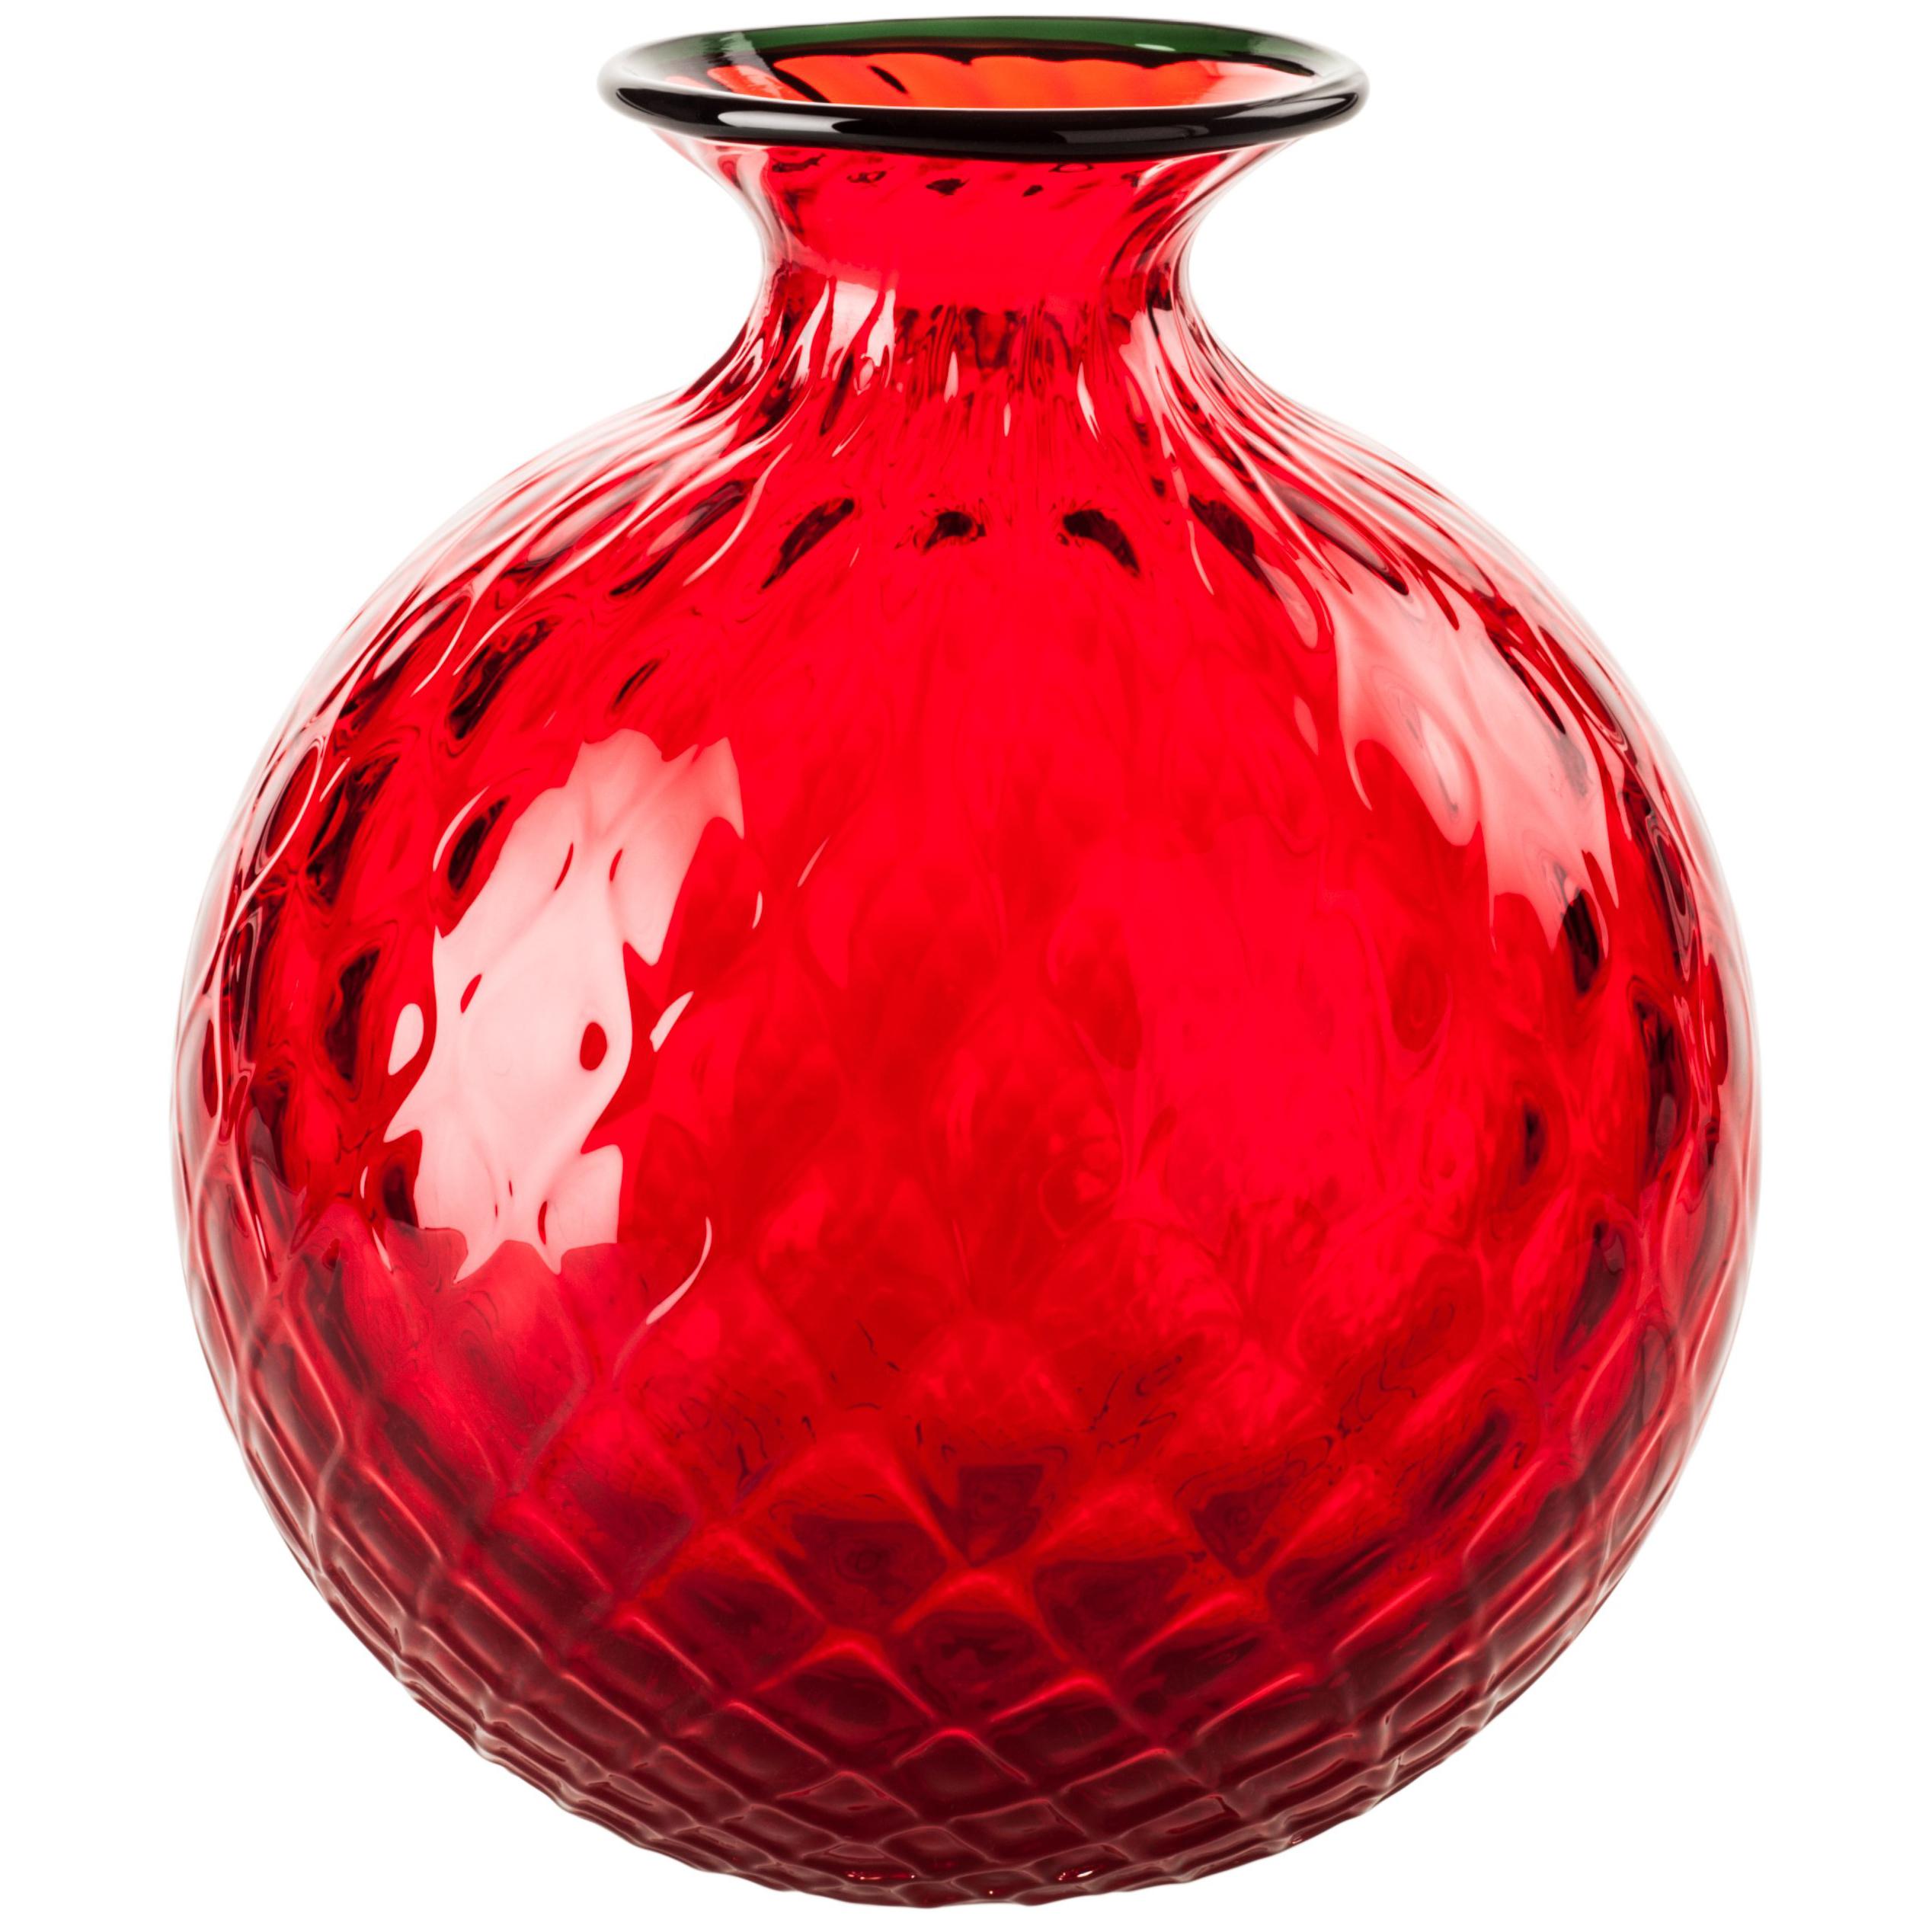 Monofiore Balaton Glass Vase in Red with Green Thread Rim by Venini